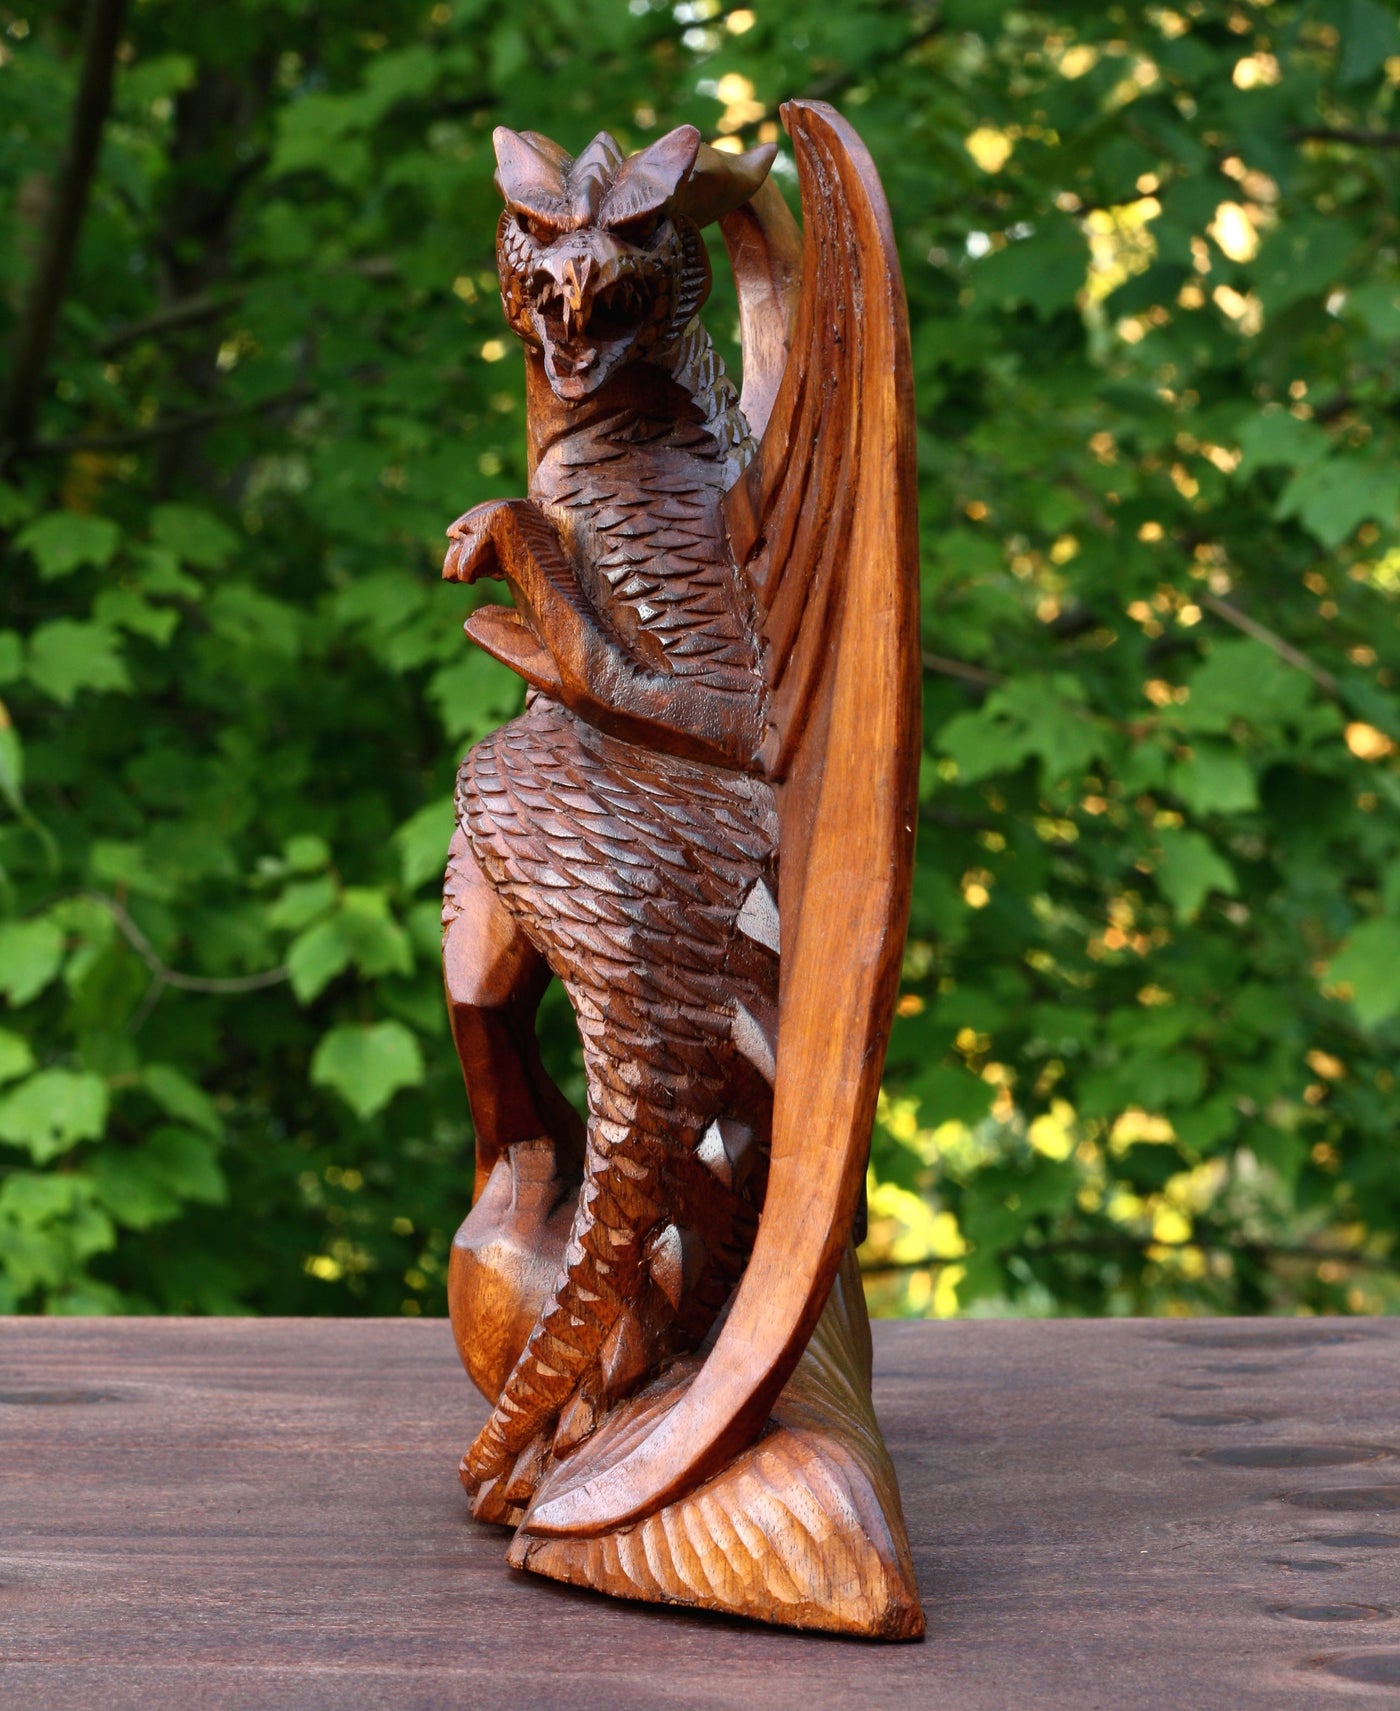 Wooden Handmade Skyrim Dragon Statue Sculpture Handcrafted Gift Art Decorative Home Decor Figurine Accent Decoration Artwork Hand Carved